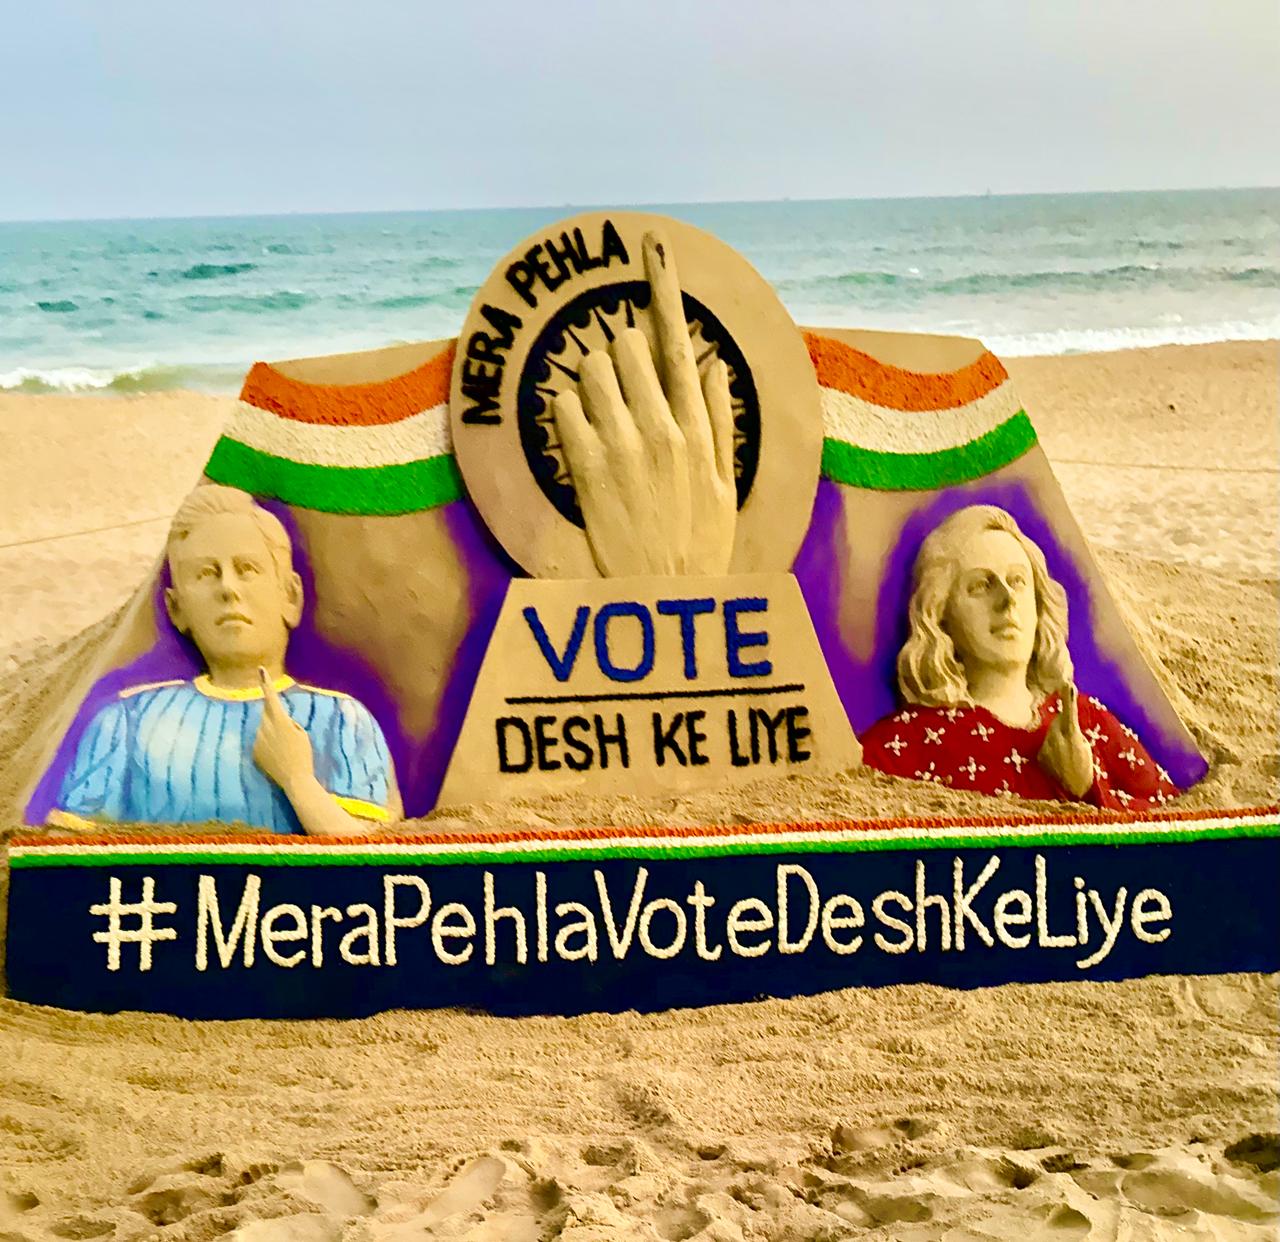 Sudarsan Pattnaik's sand sculpture at Puri beach gives a new dimension to  "Mera Pehla Vote Desh Ke Liye" campaign